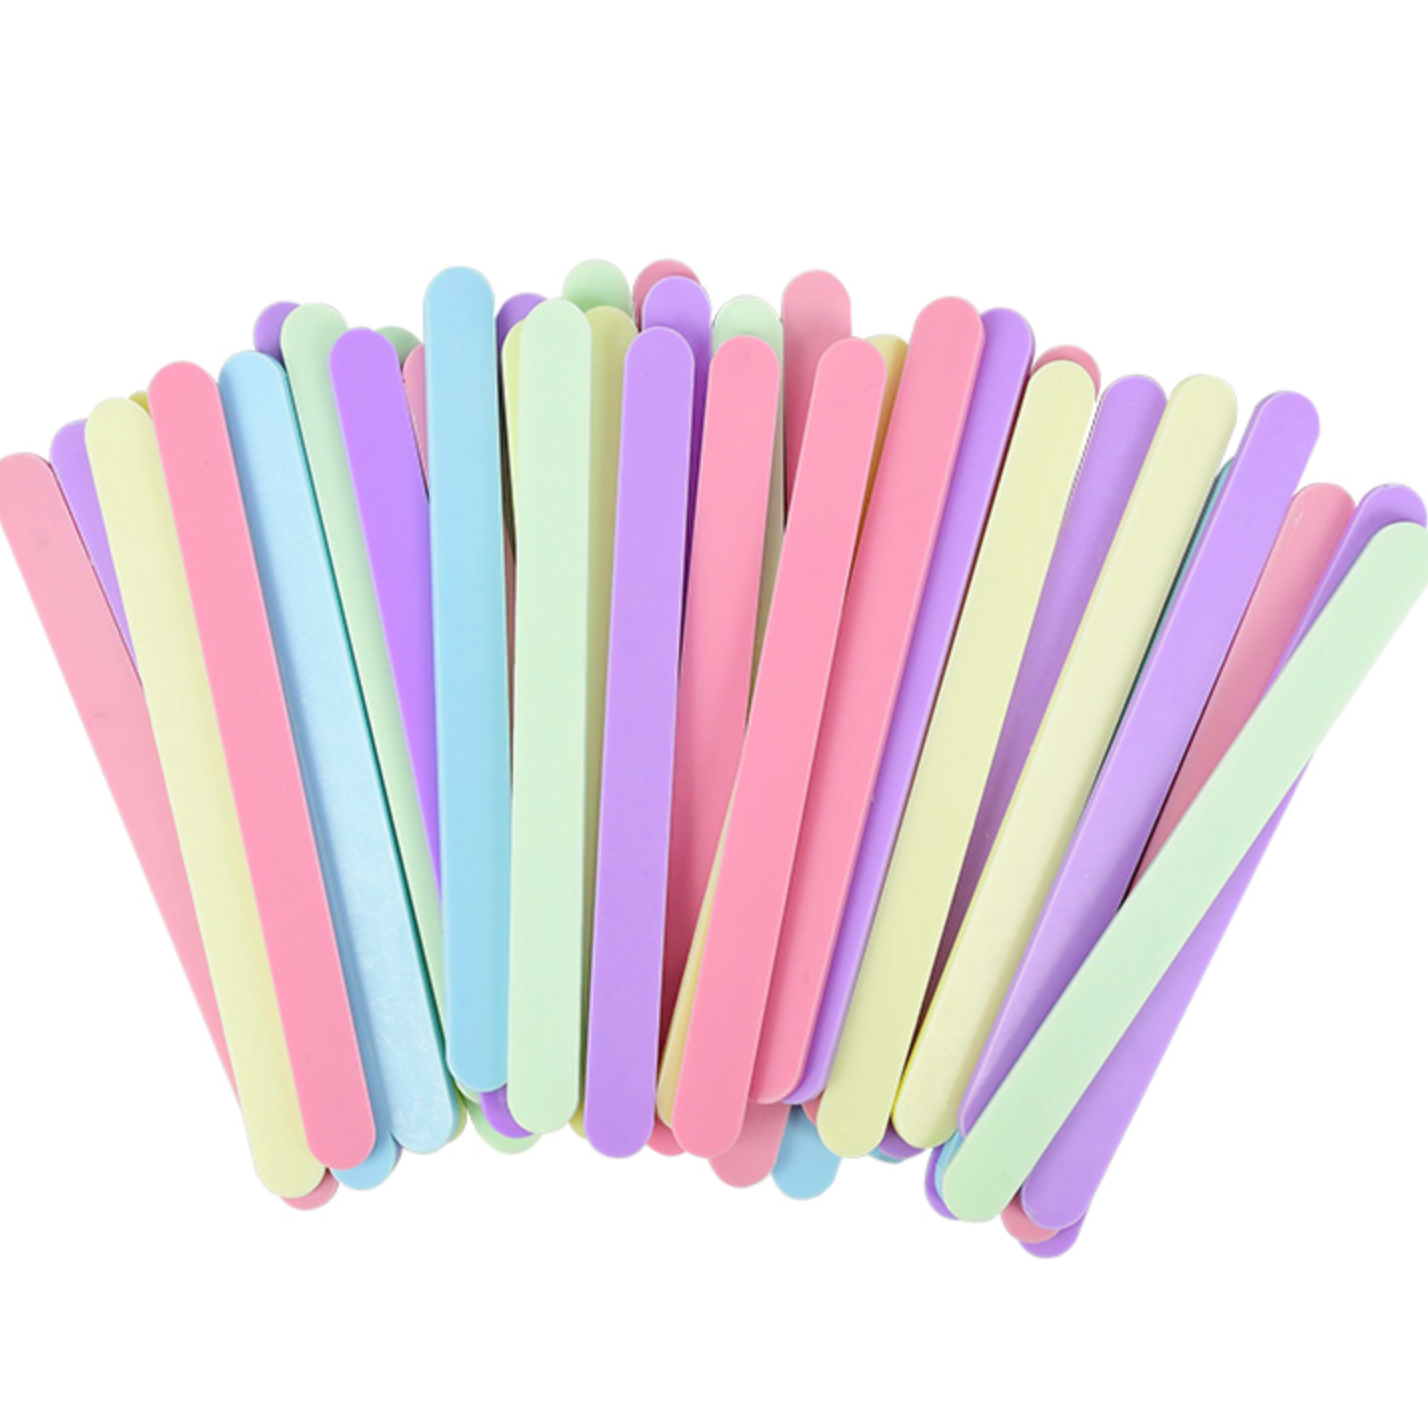 Mixed Pastel Cakesicle Sticks